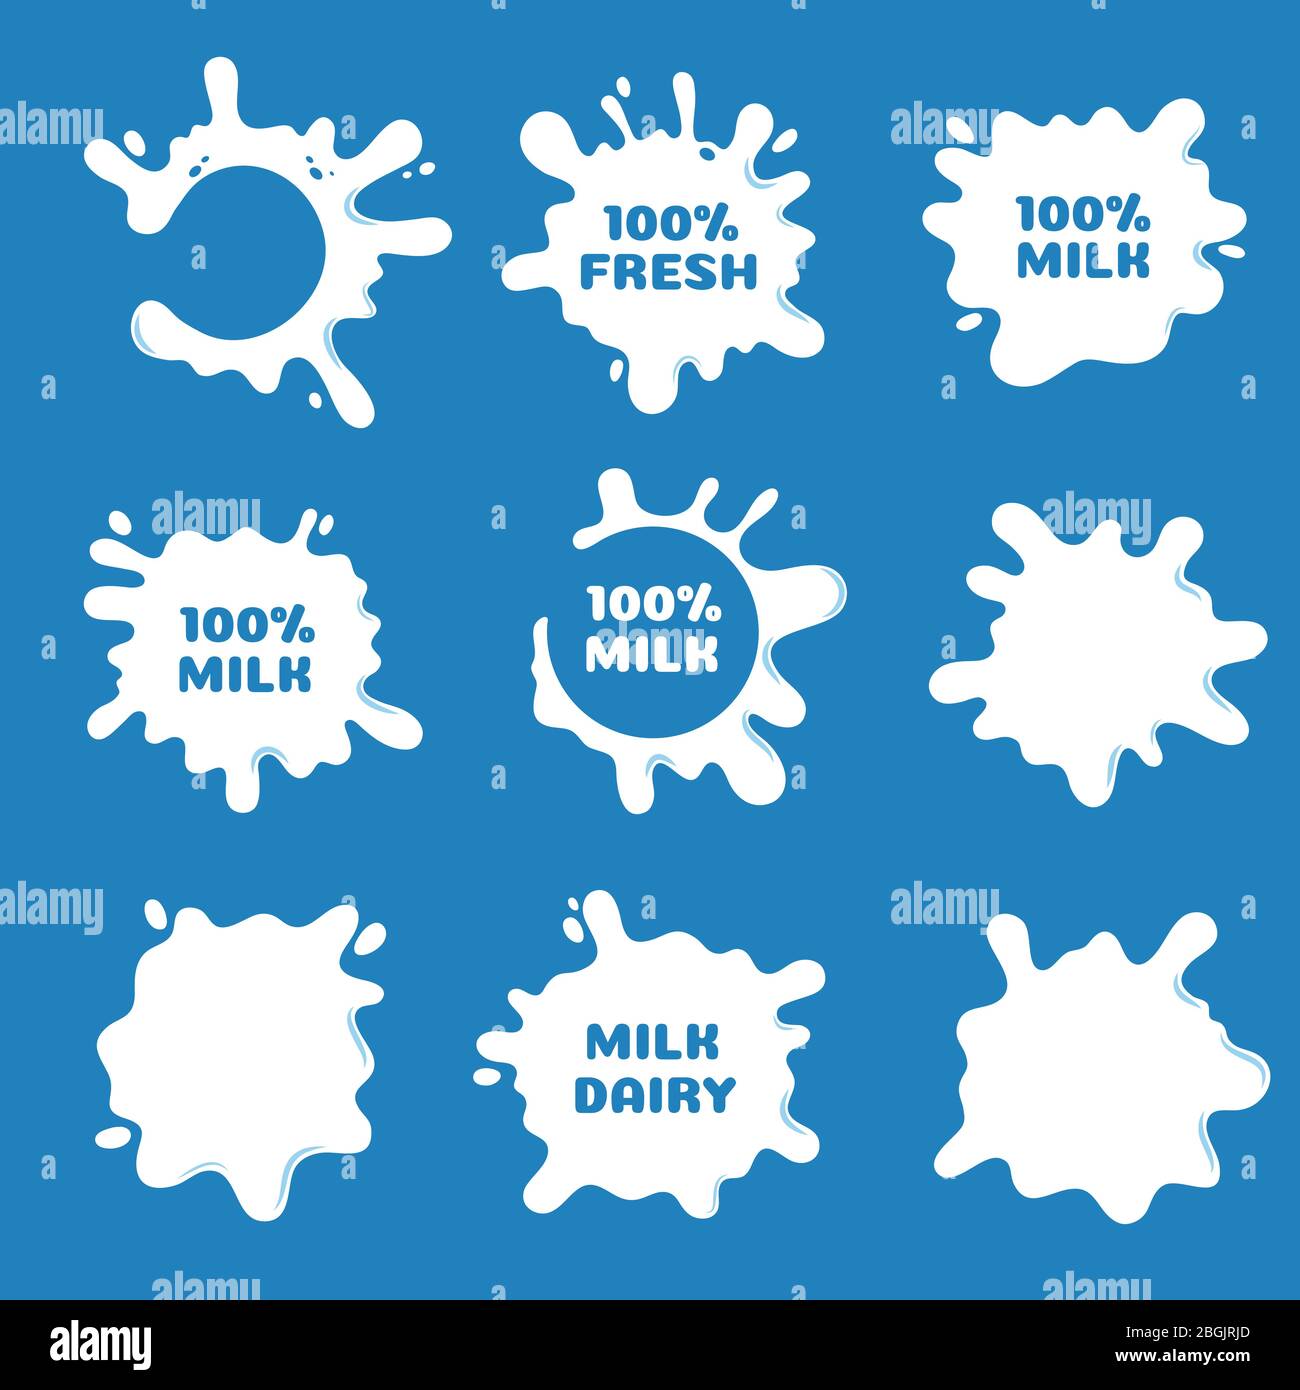 White milk, yogurt and cream splash and blot shapes. Natural dairy product vector labels isolated. Illustration of product yogurt liquid, blot label Stock Vector